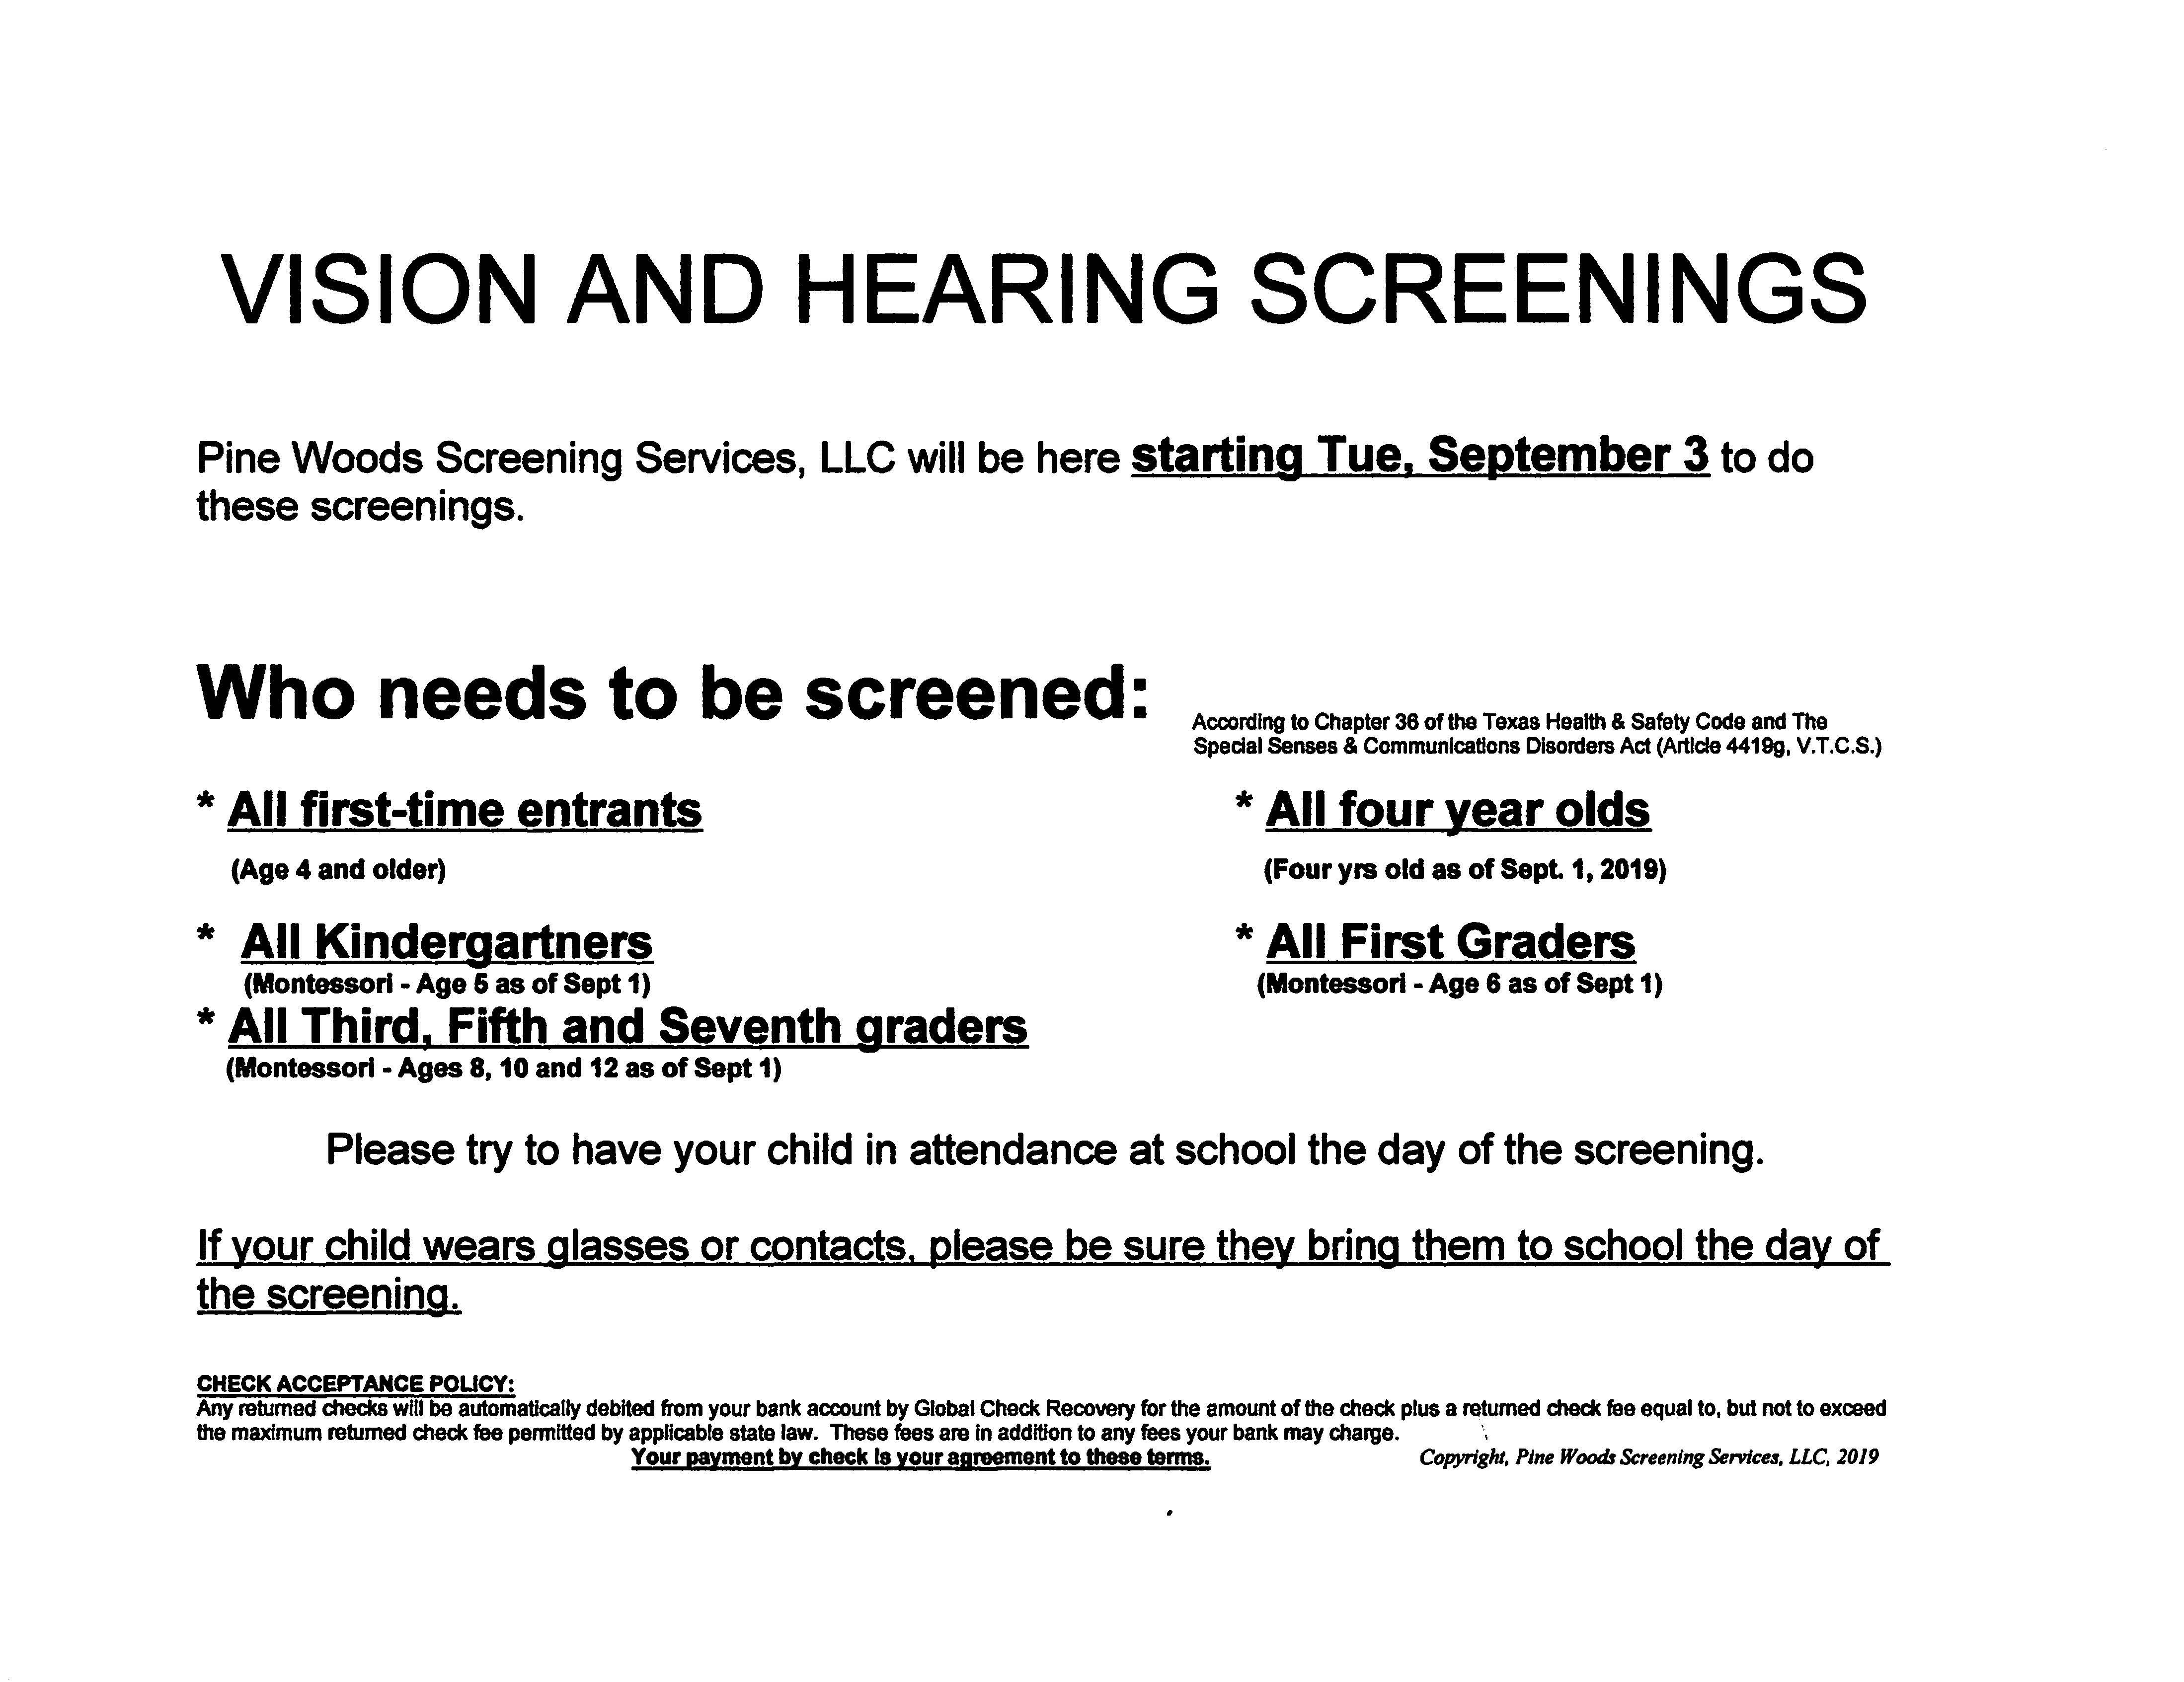 Vision and hearing screenings